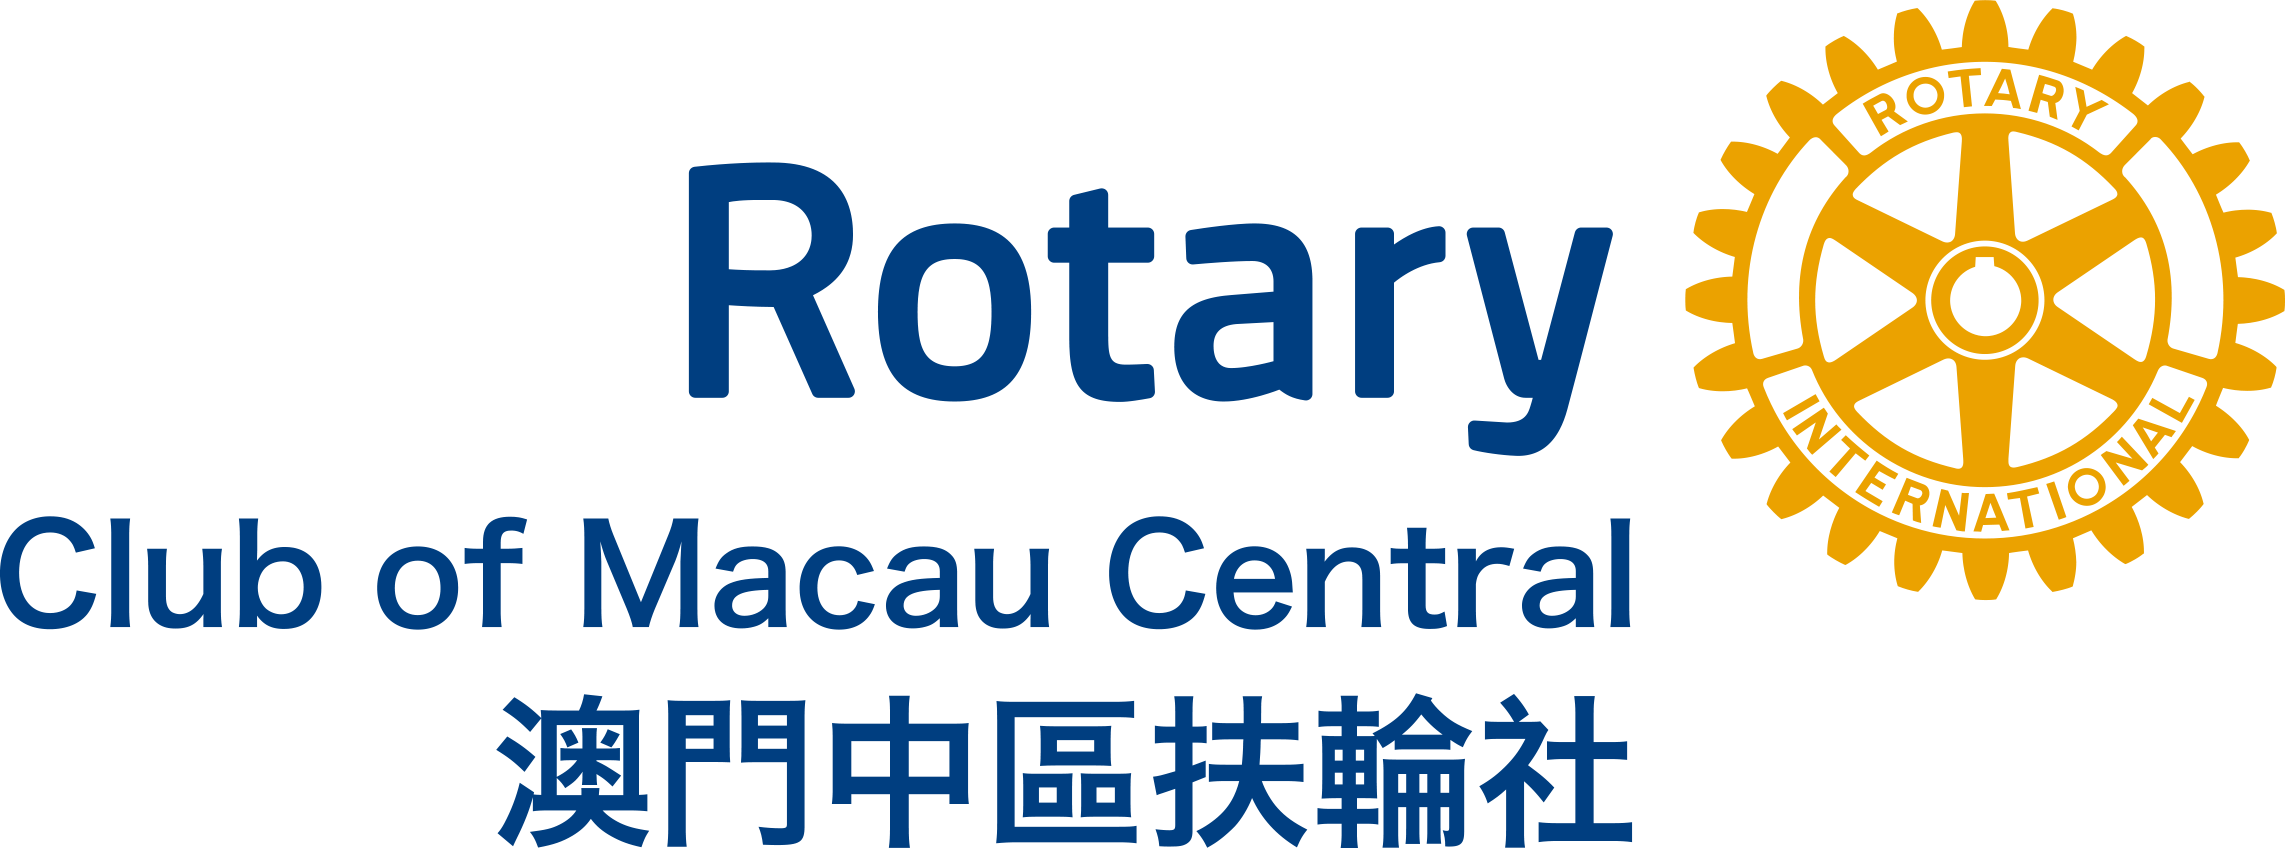 48_Rotary_web